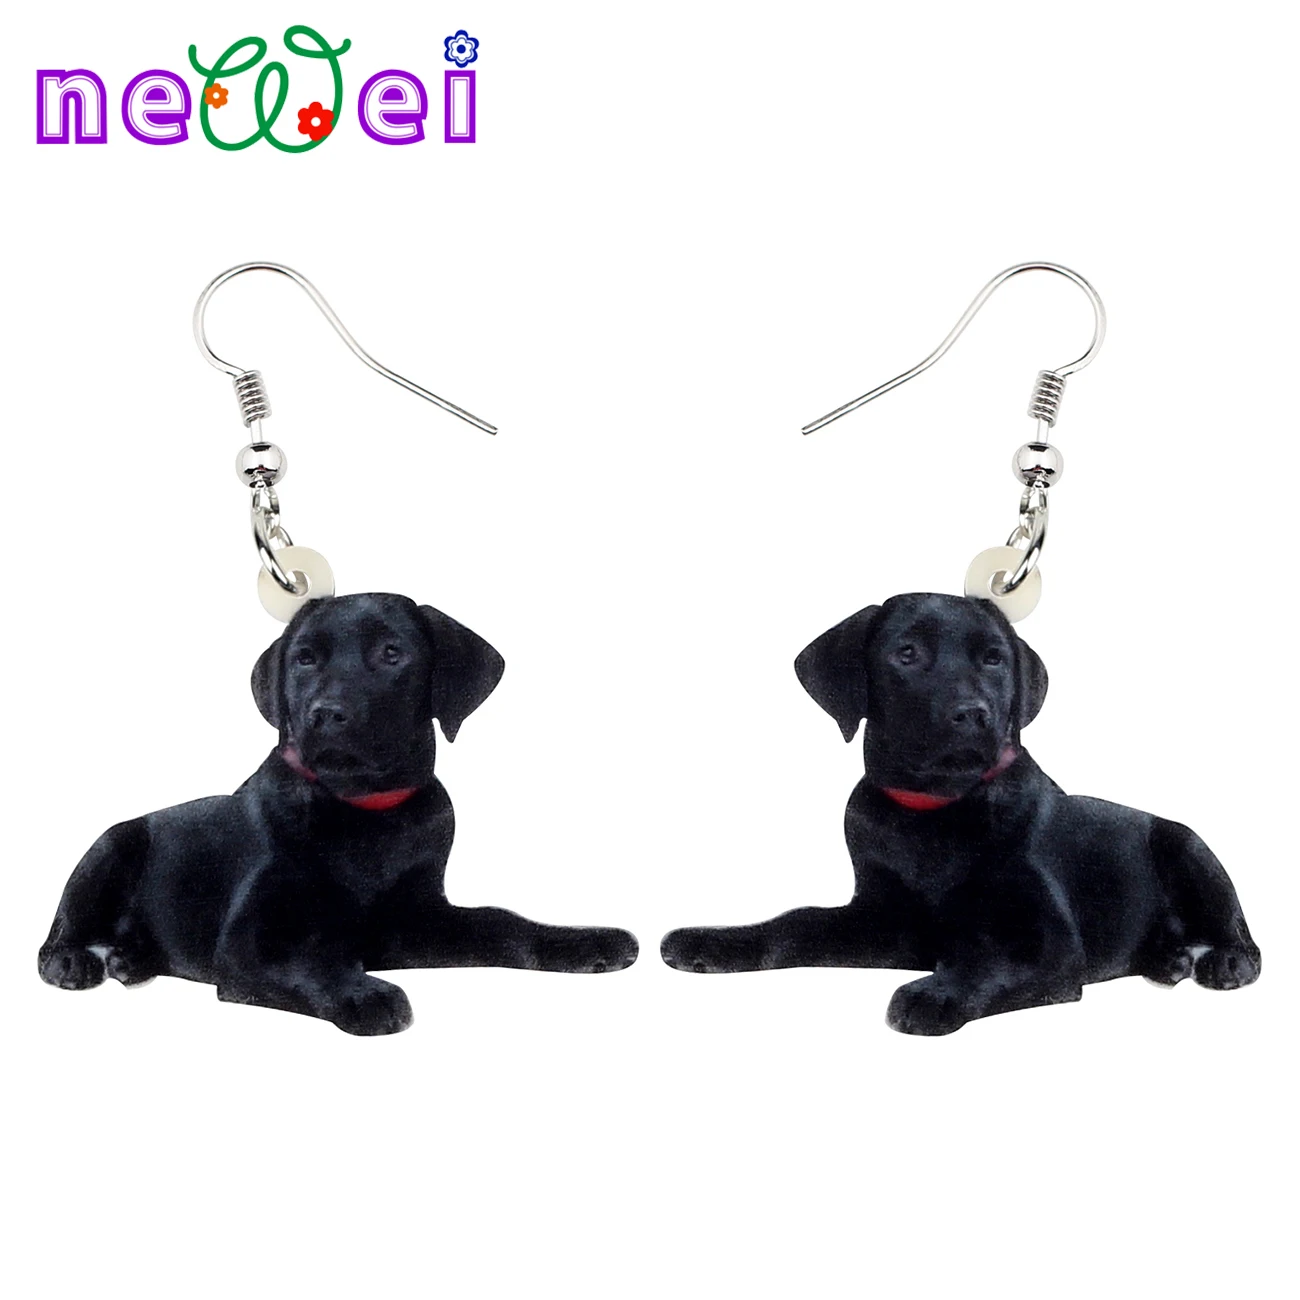 

Acrylic Sweet Black Labrador Dog Earrings Dangle Drop Pets Animals Jewelry Charms For Women Girls Teens Kids Fashion Gifts